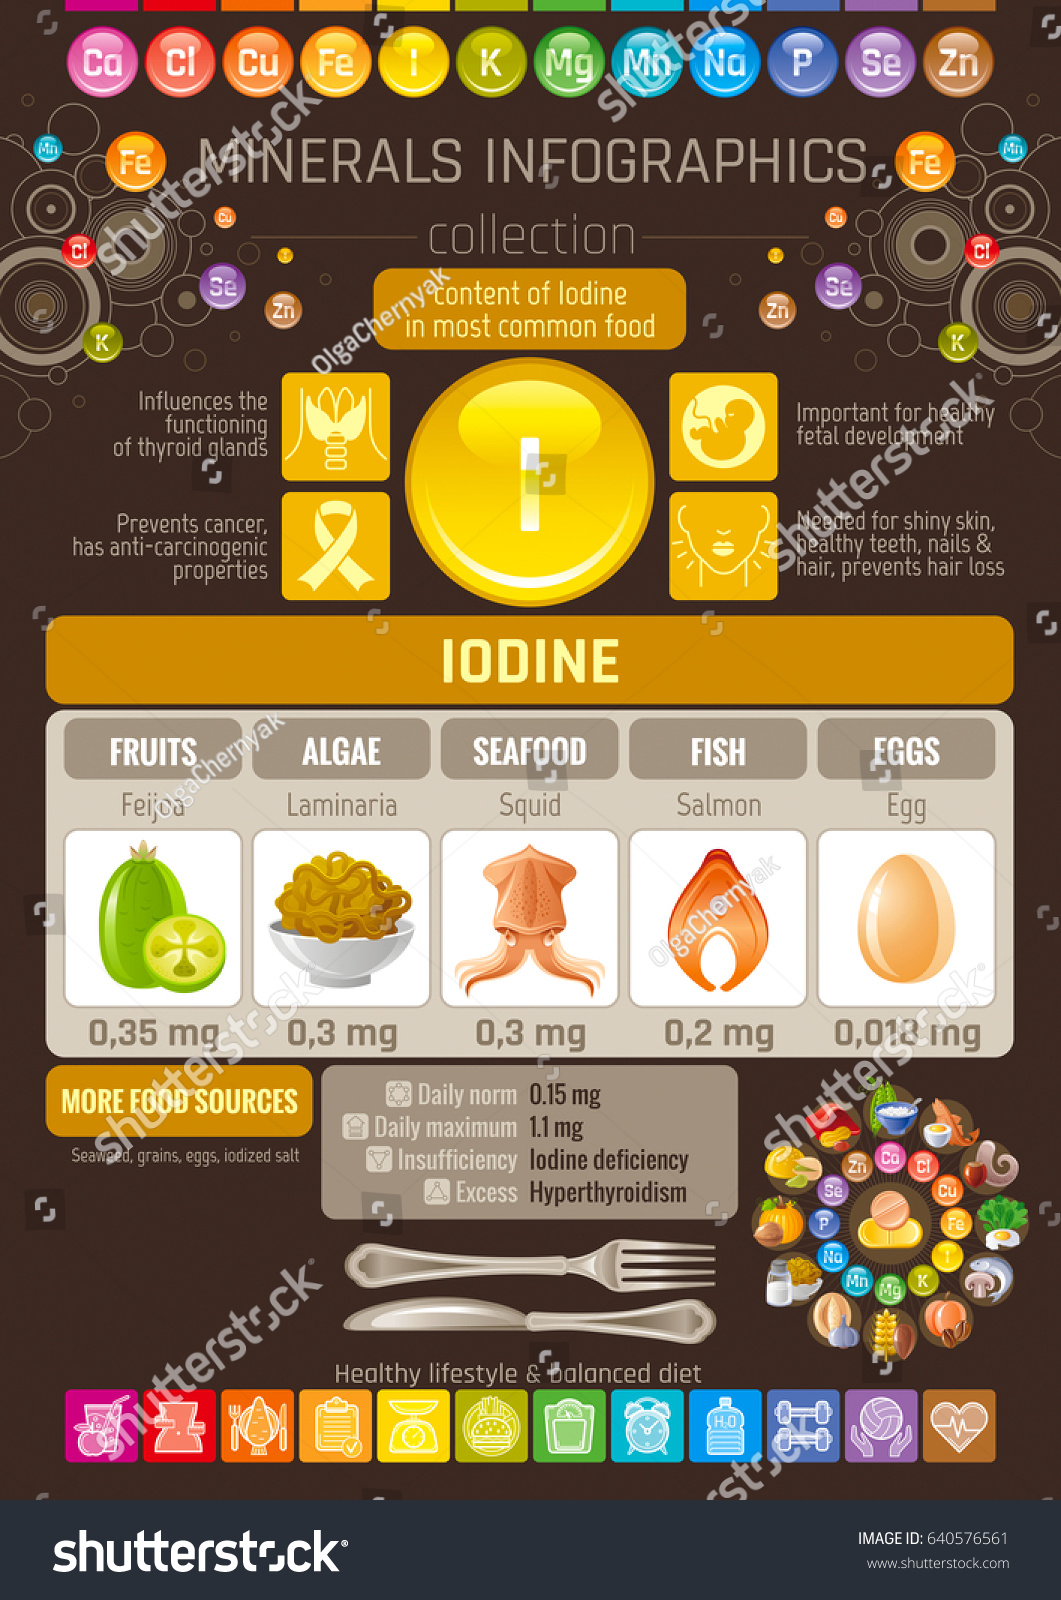 health benefits of iodine supplements